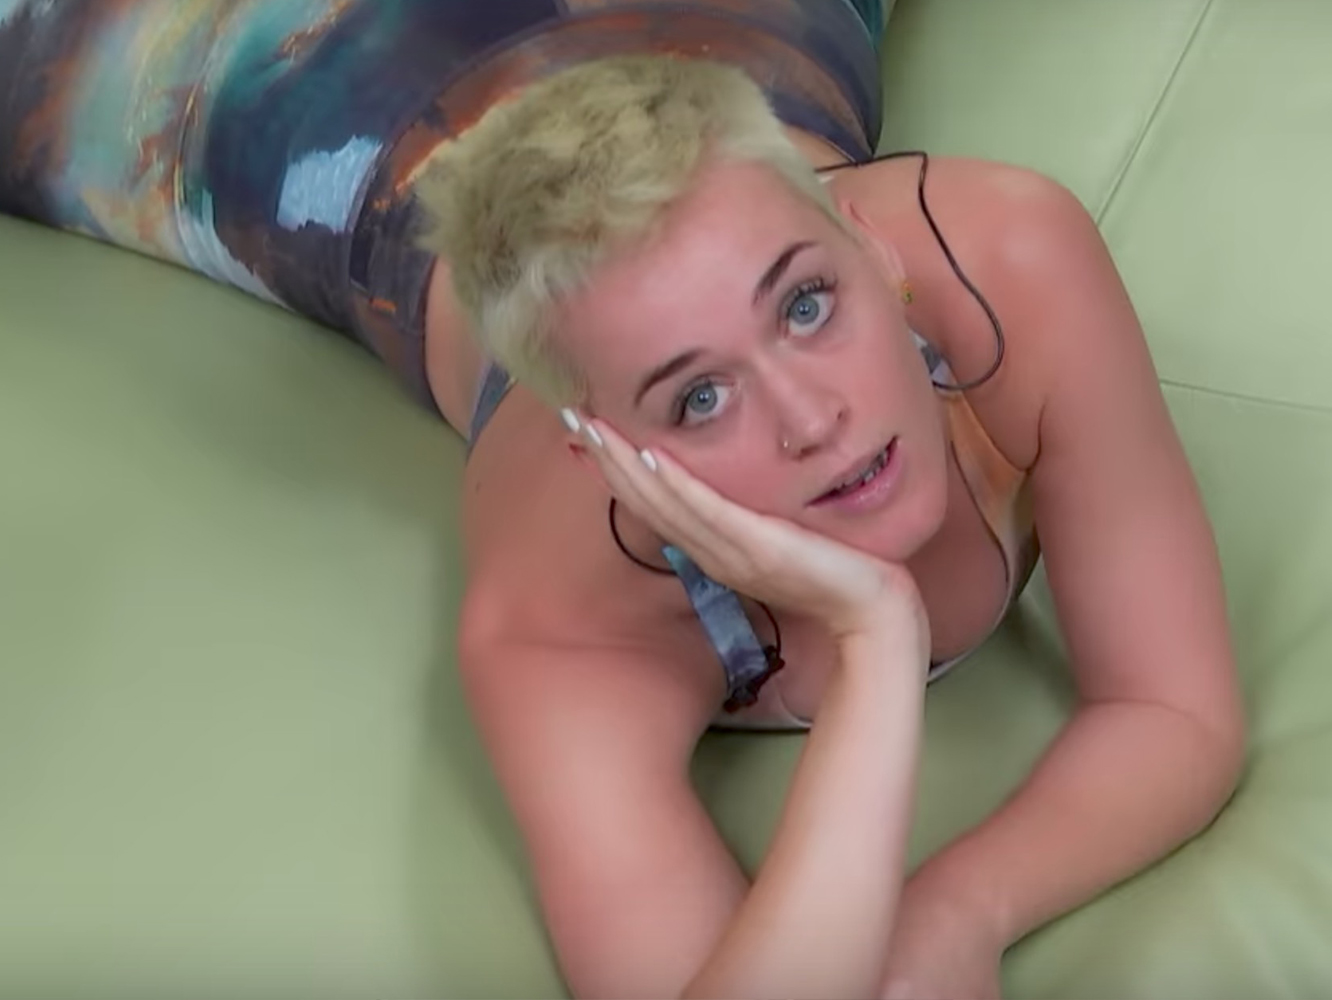  Tráiler para ‘Will You Be My Witness?’, el documentaripé de Katy Perry